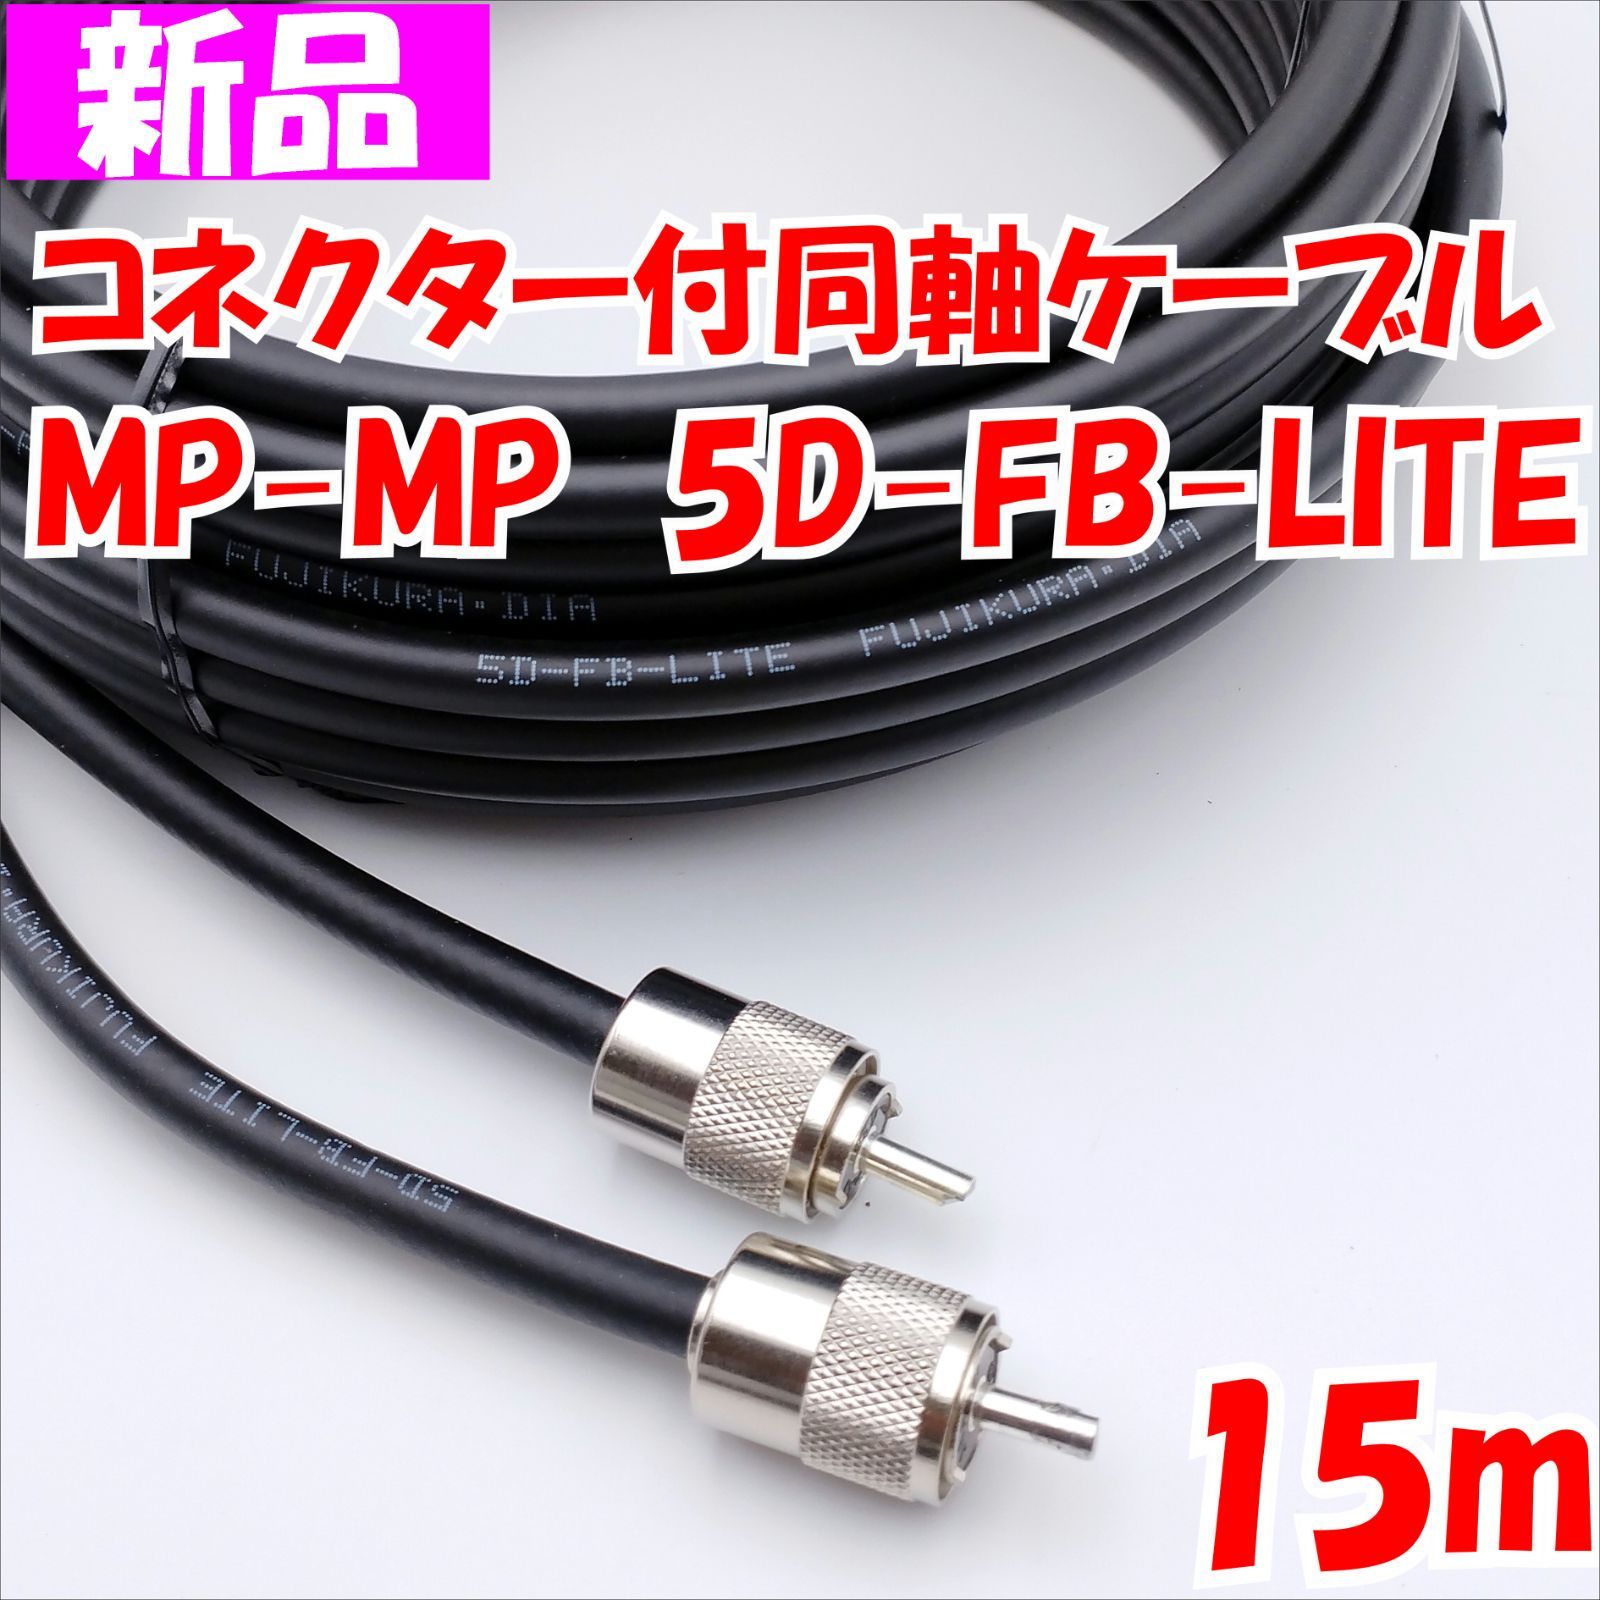 MP-MP 15m 5D-FB-LITE コネクター付同軸ケーブル - ayyildizteknoloji